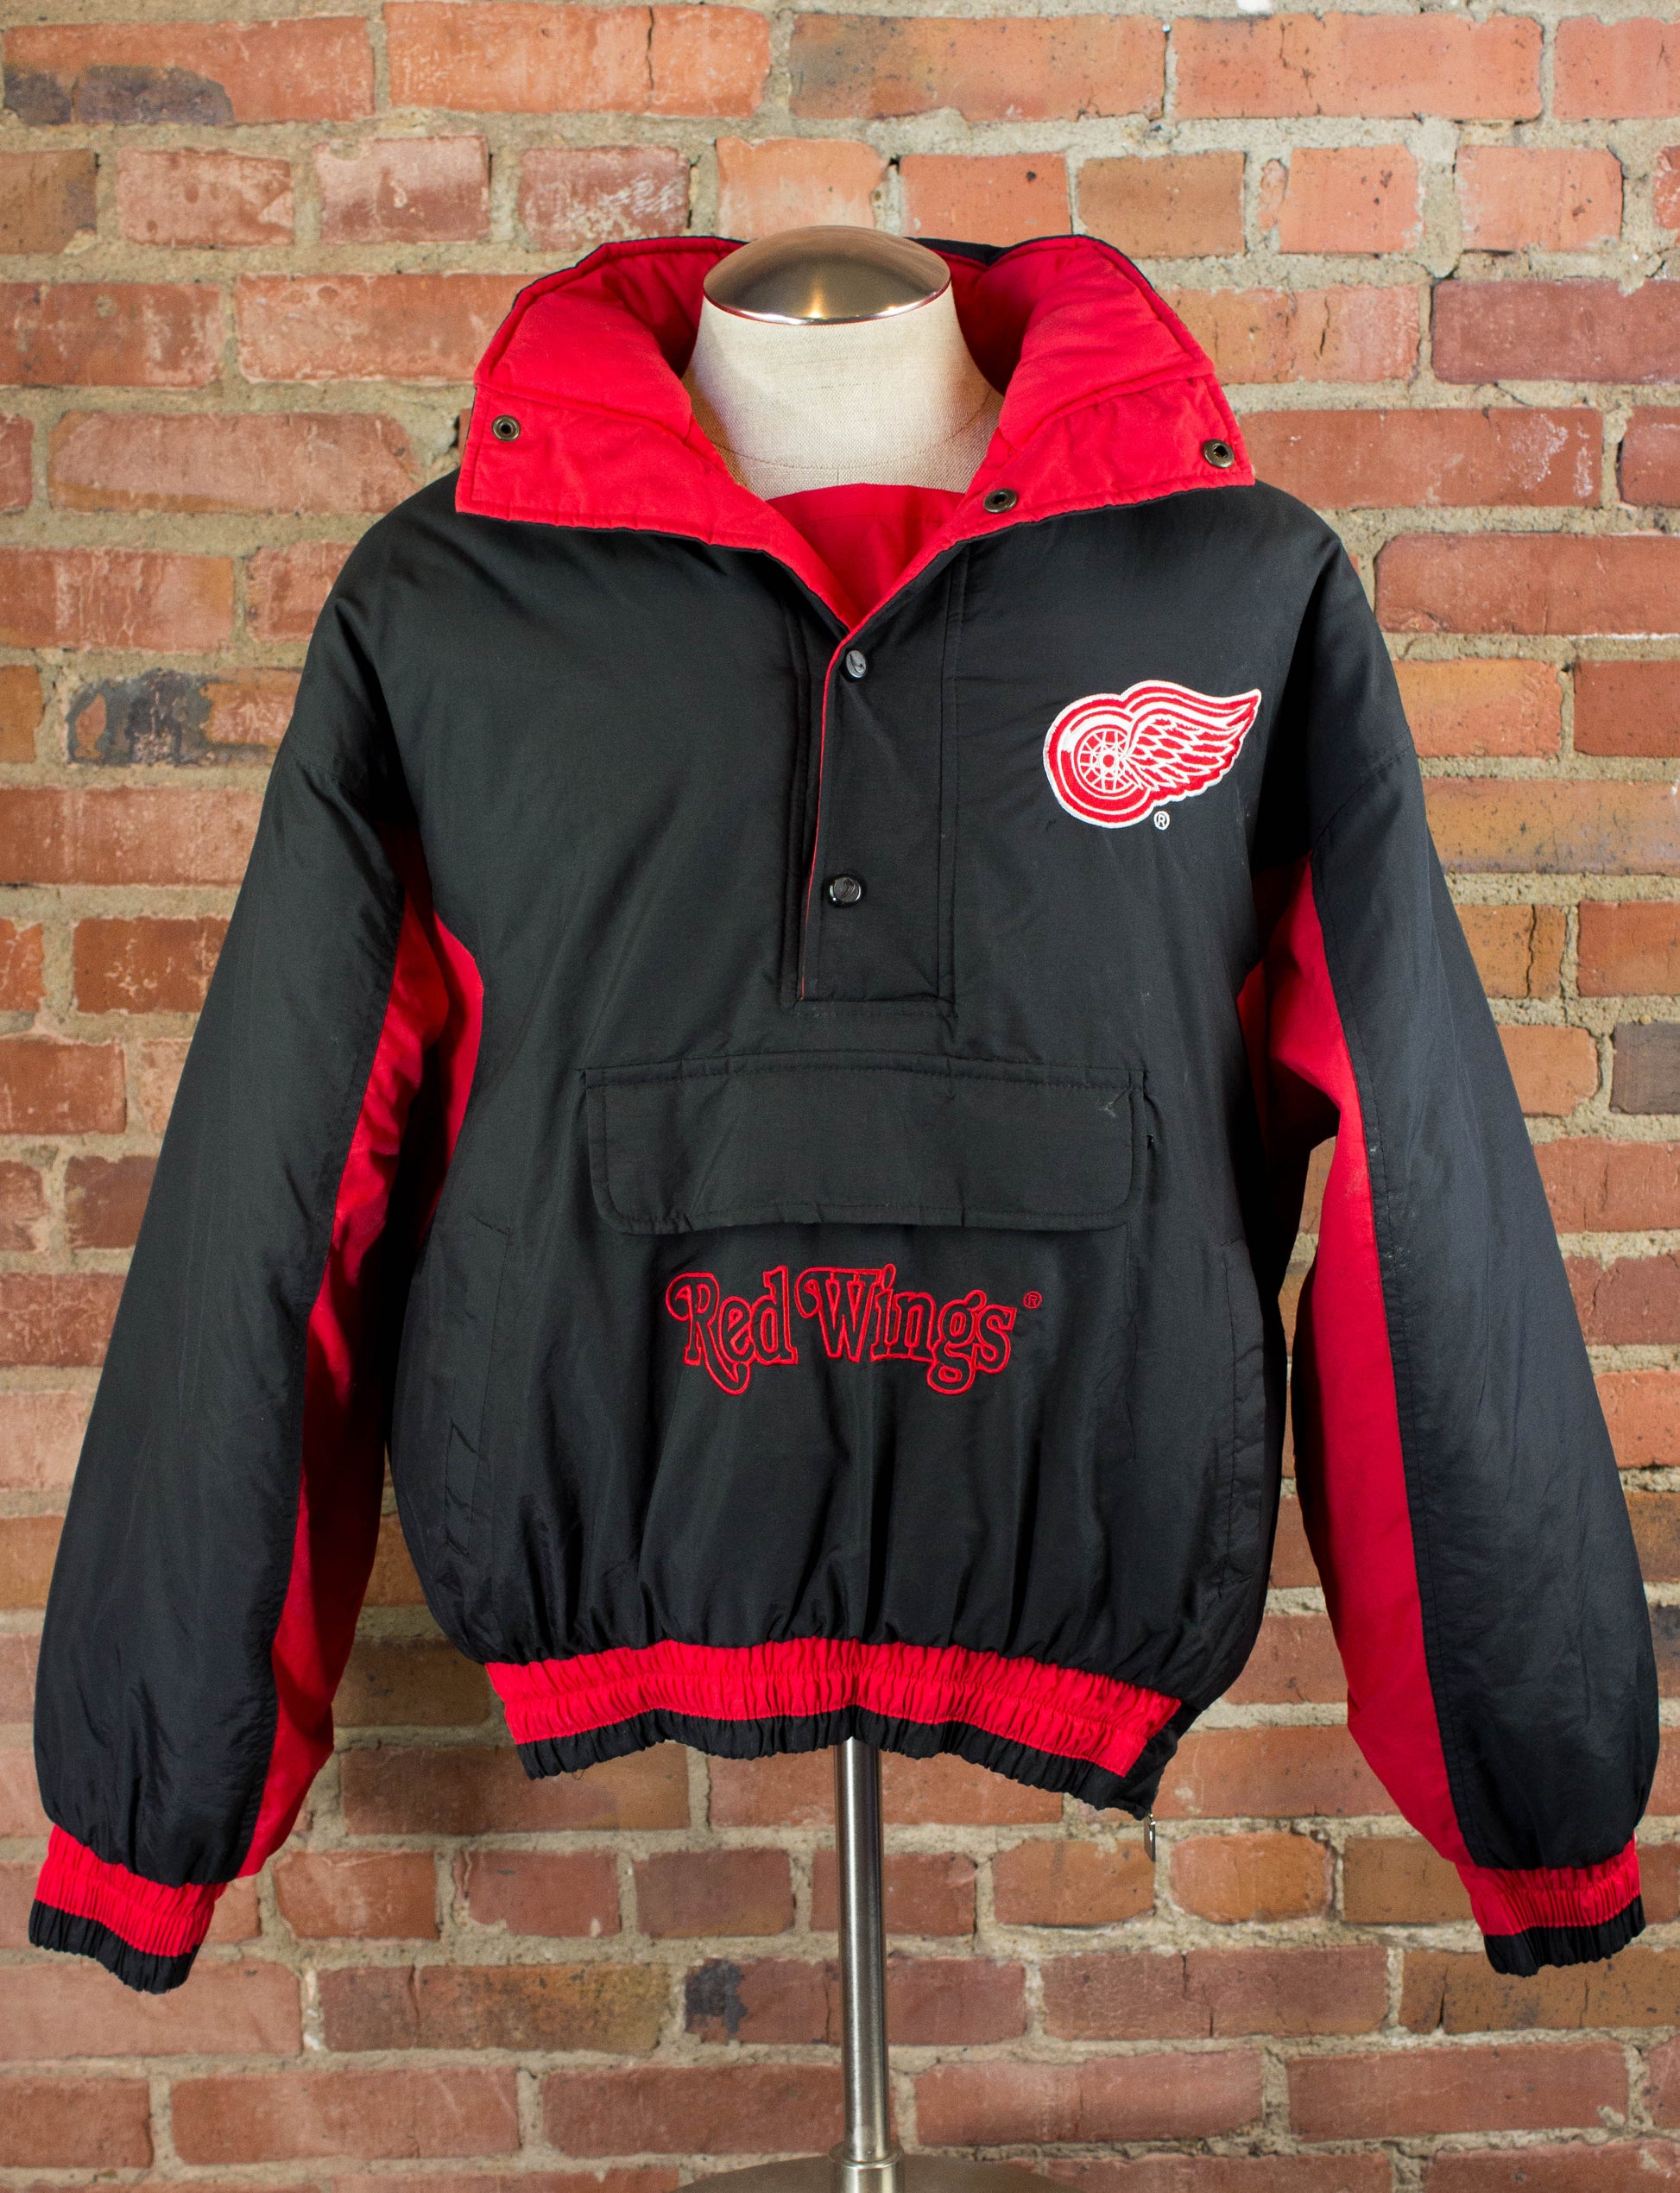 Vintage 90s Chalk Line Detroit Red Wings Puffer Jacket Unisex Large